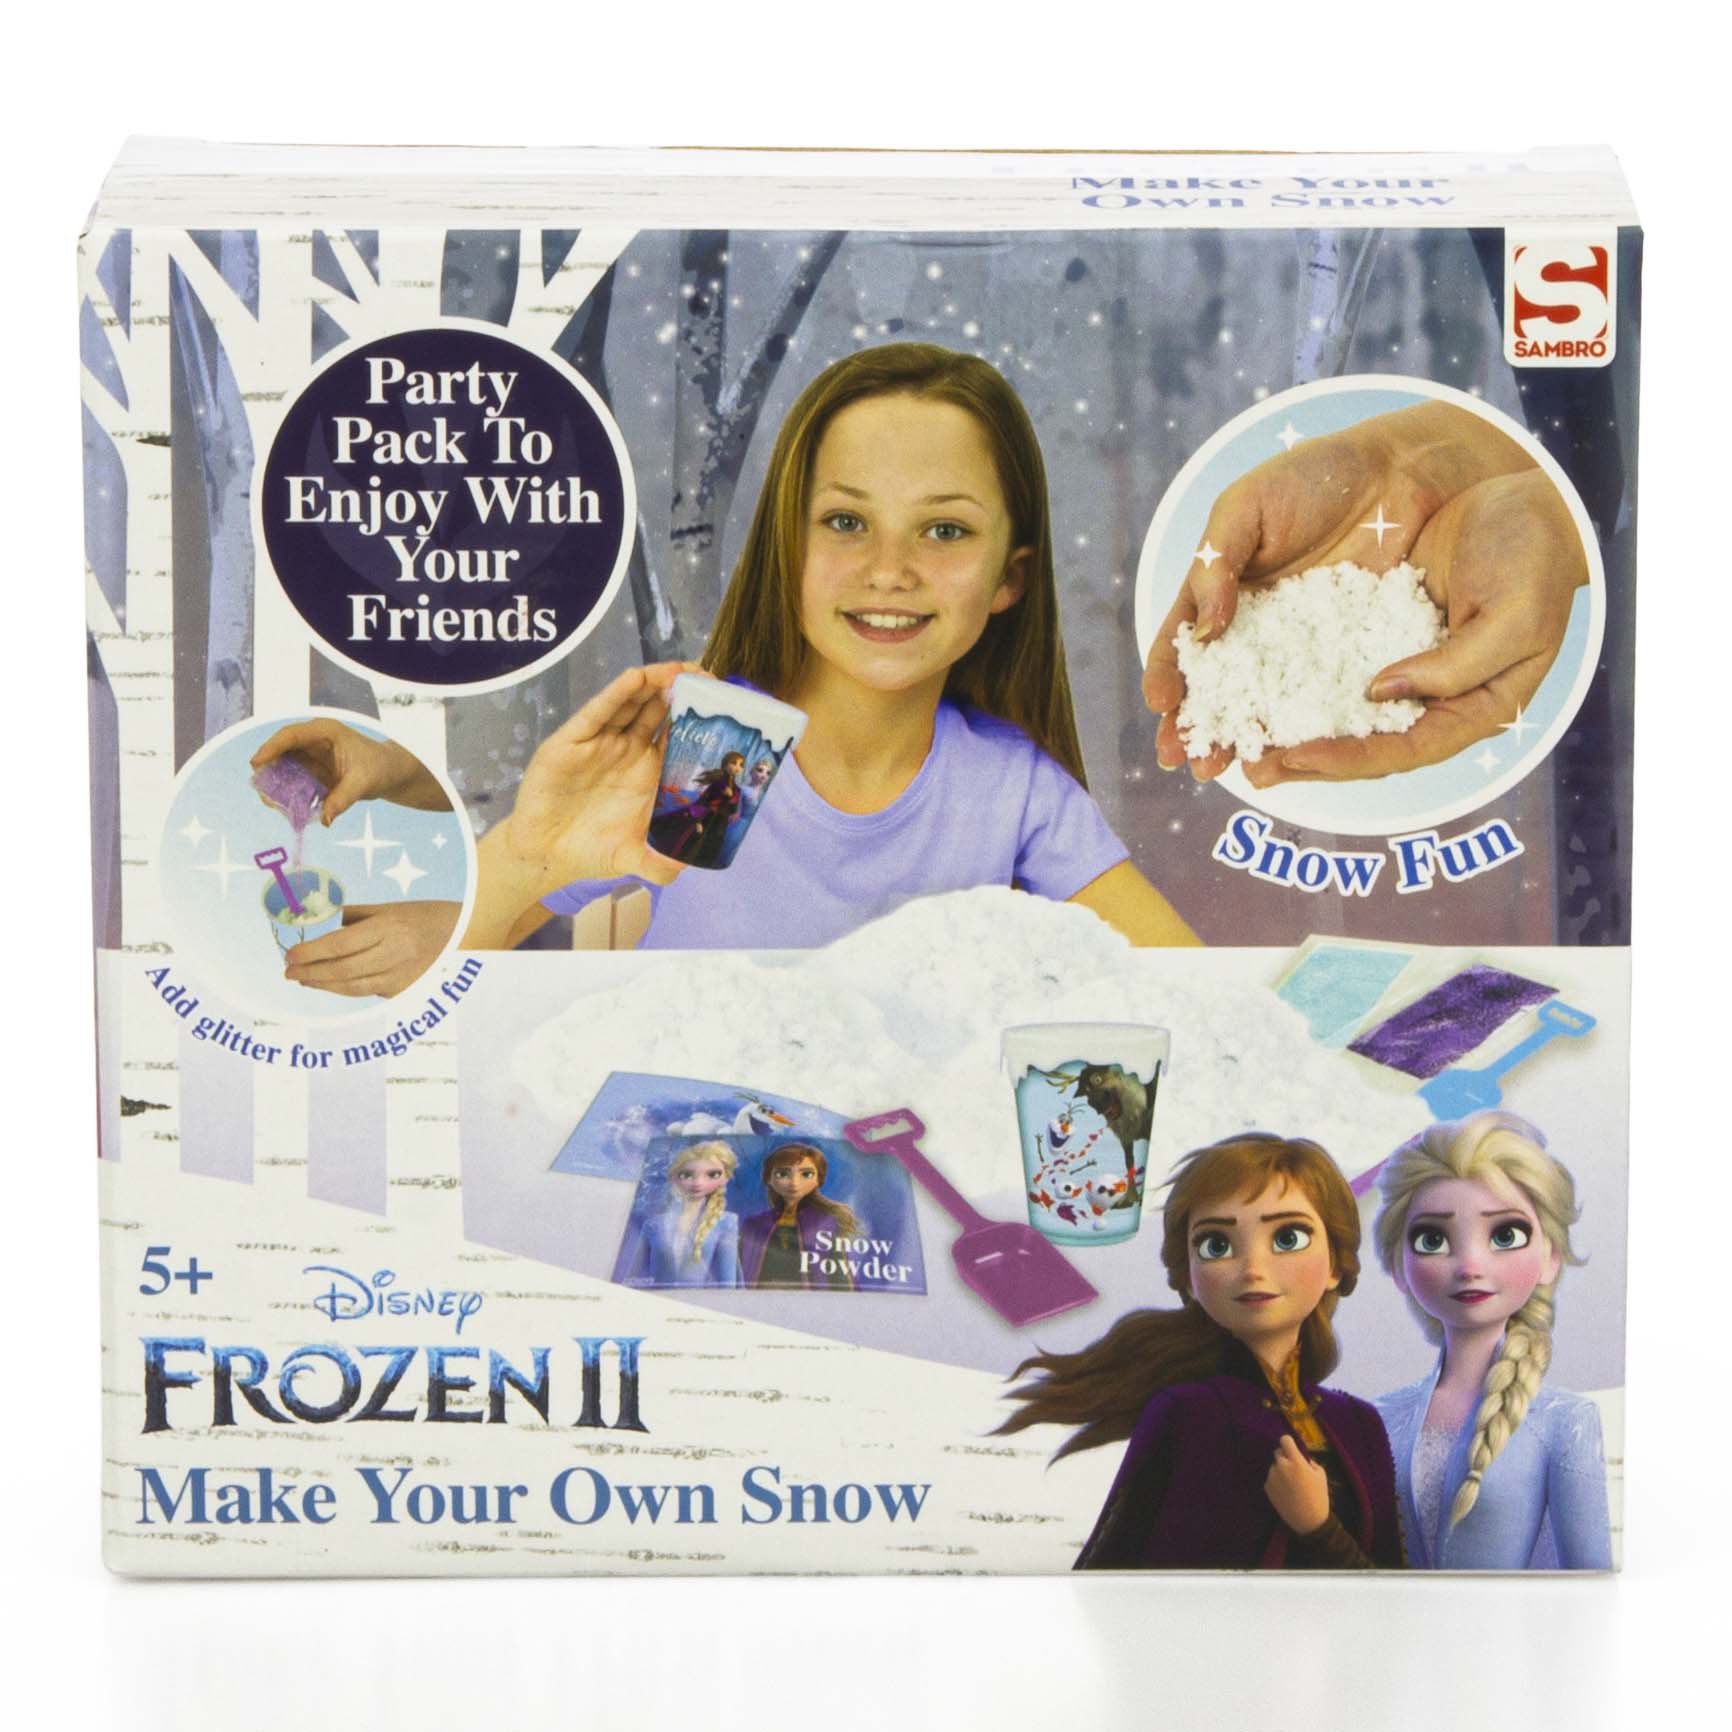 dfr2-4914-disney-frozen-2-make-your-own-snow-wholesale-accessories